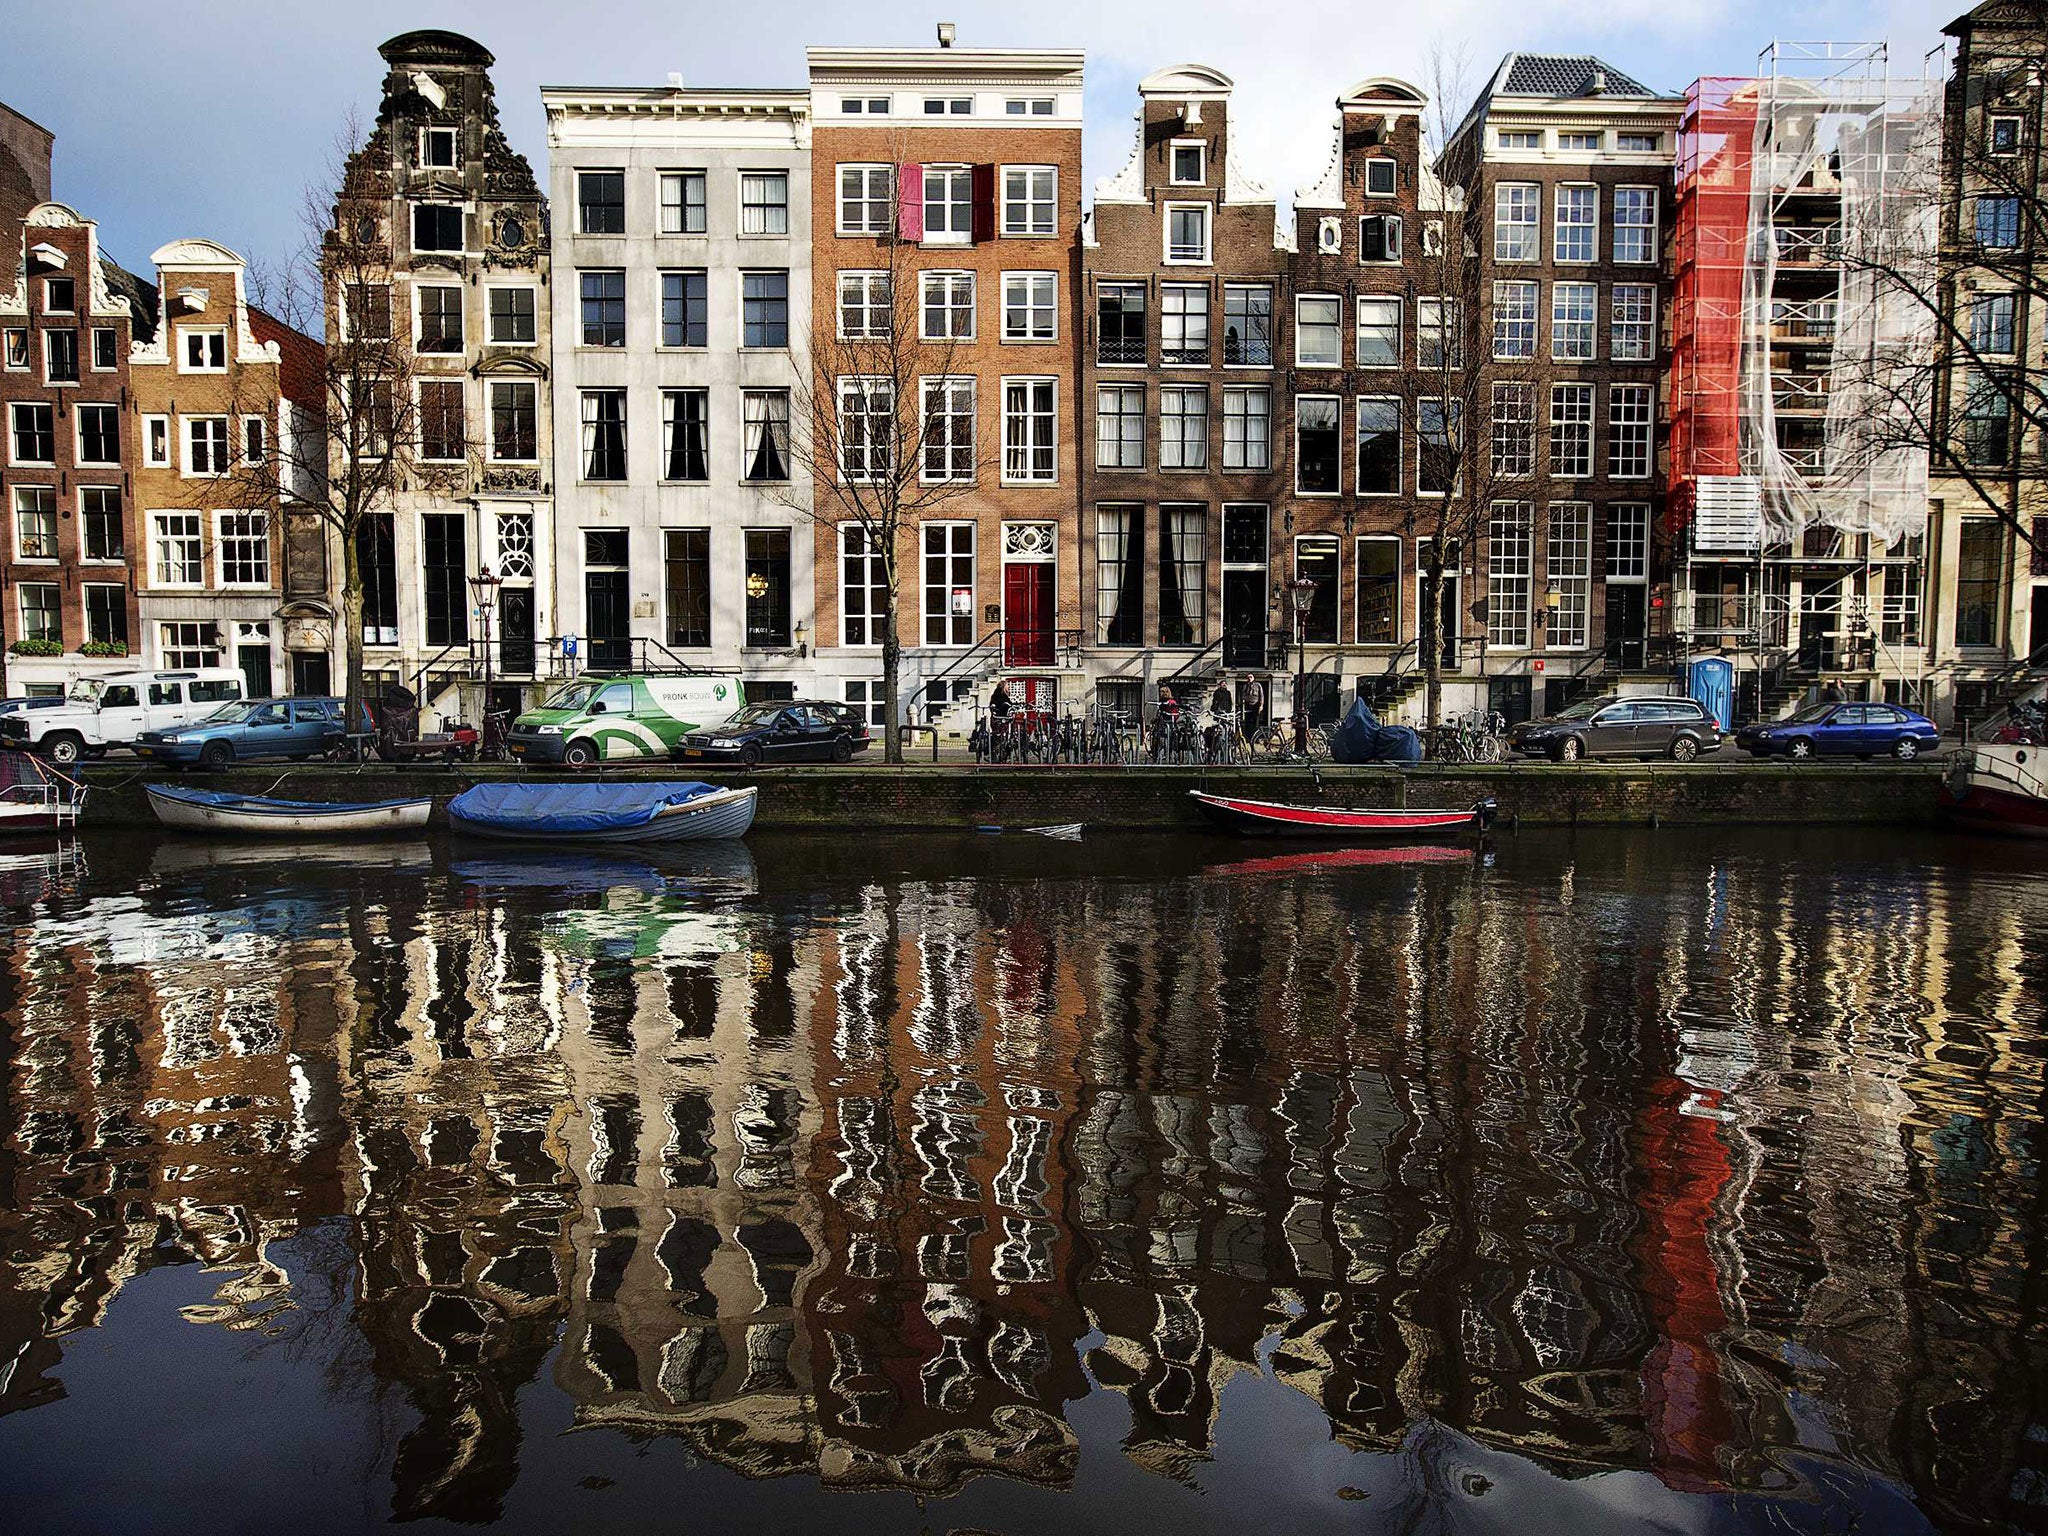 Amsterdam is attracting British buyers